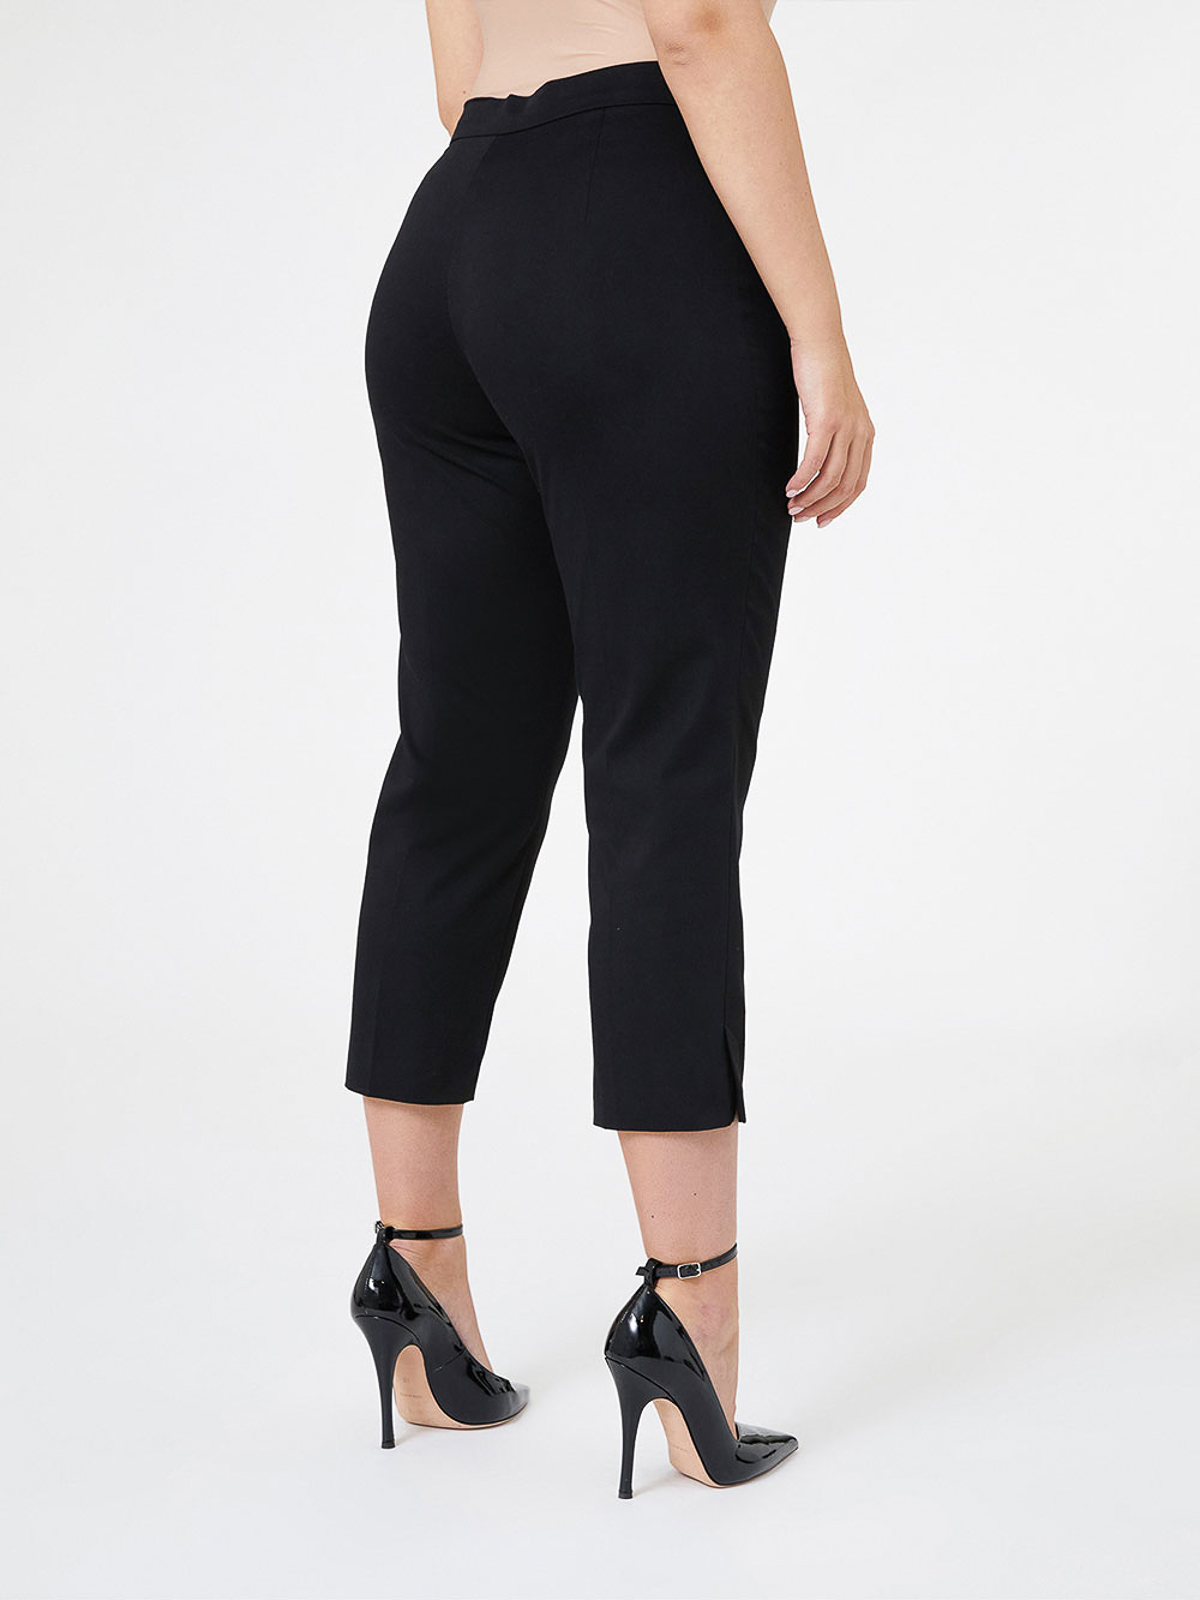 ATTLADY Shapewear for Women Tummy Control High Waisted Yoga Pants  Compression Leggings Body Shaper Dark Grey at Amazon Women's Clothing store